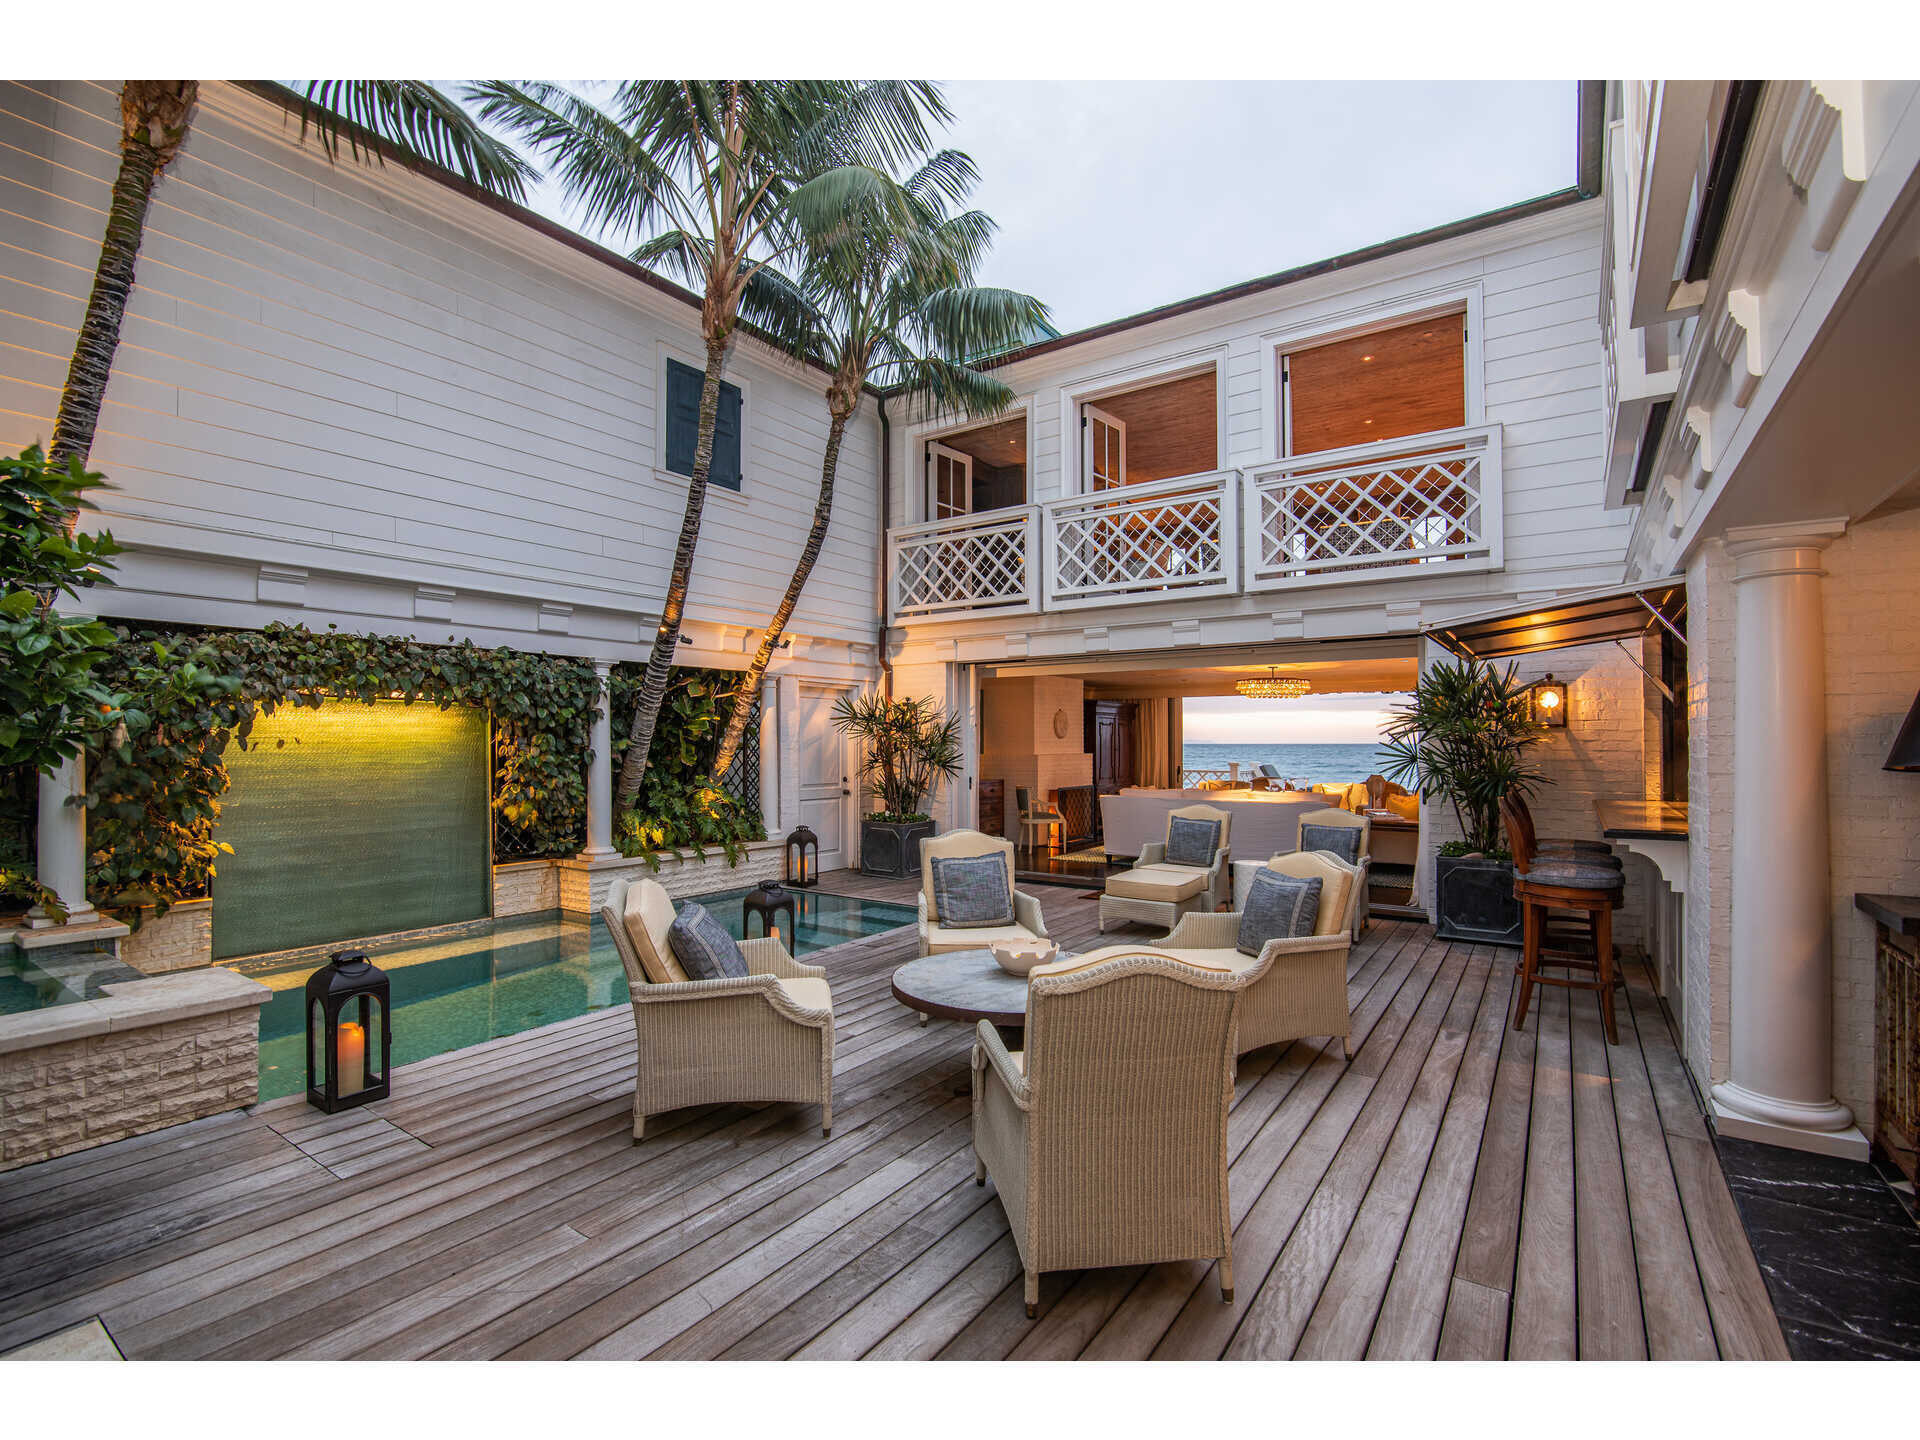 Francis York A Resort Developer’s Oceanfront Malibu Mansion21.jpg